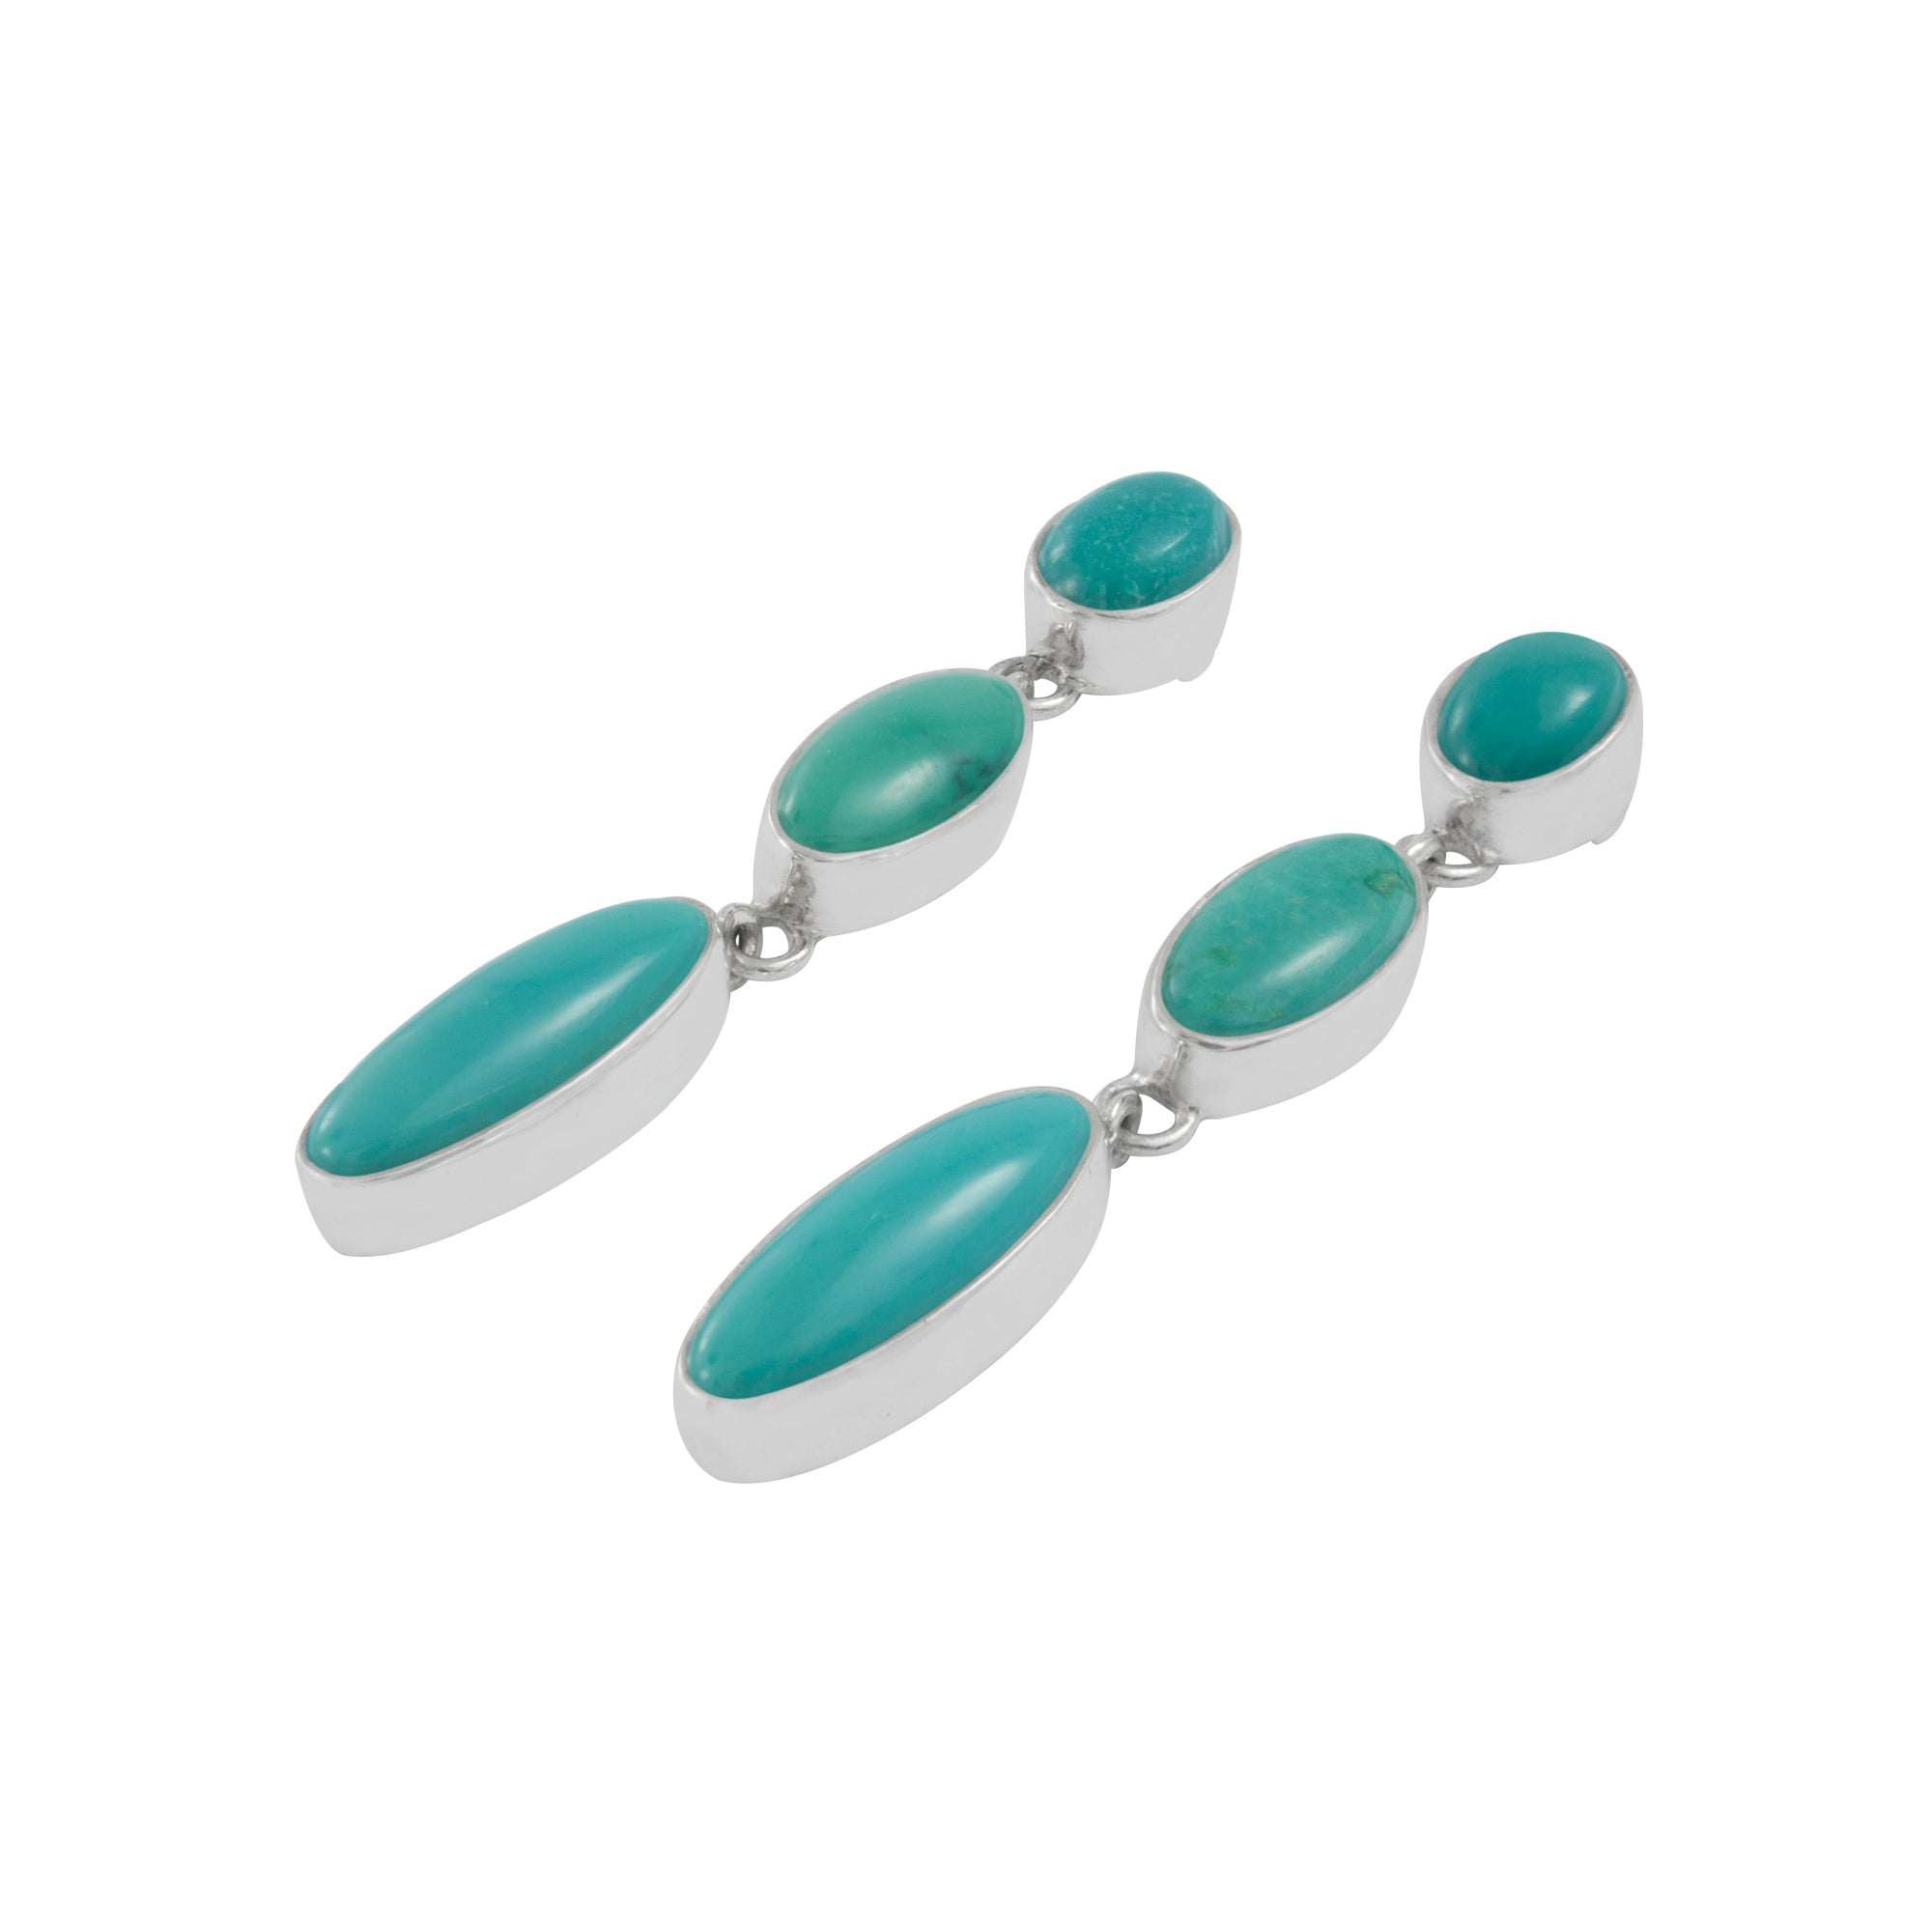 Stunning Turquoise drop earrings